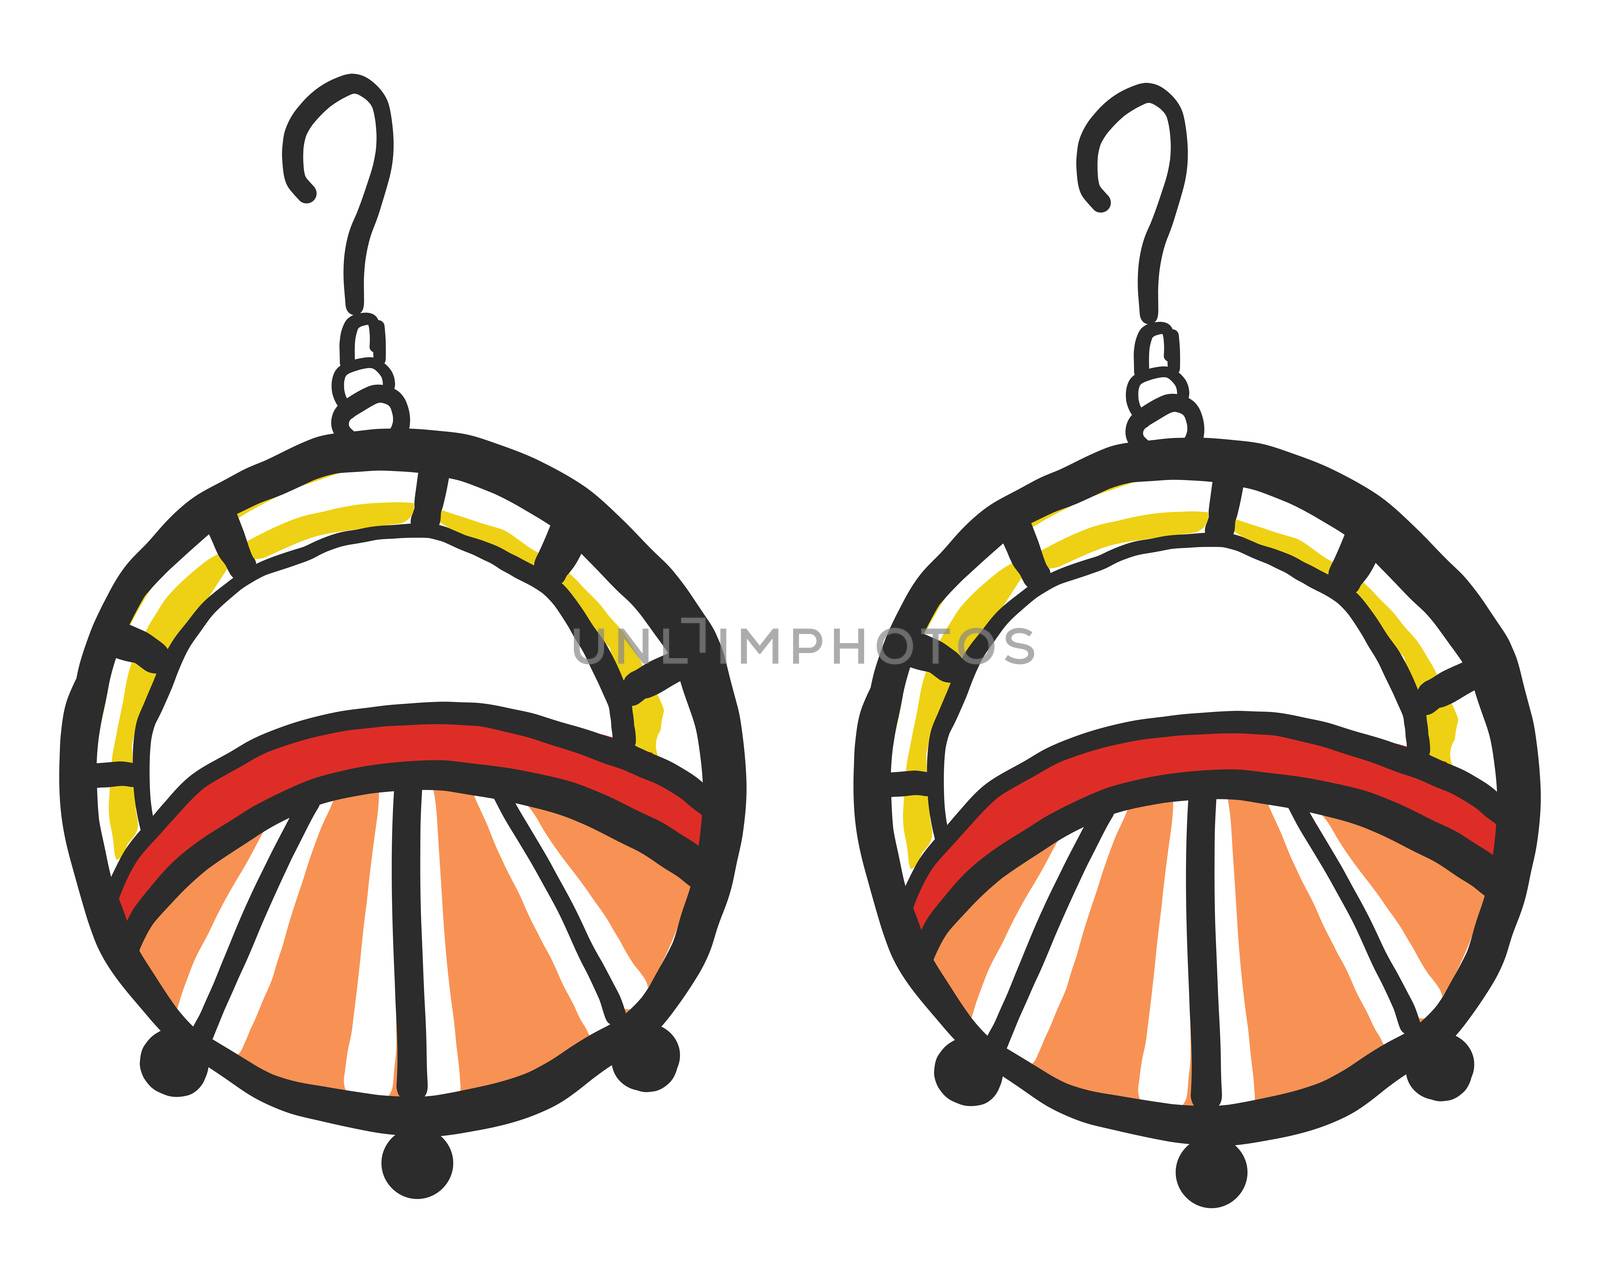 Round earrings , illustration, vector on white background